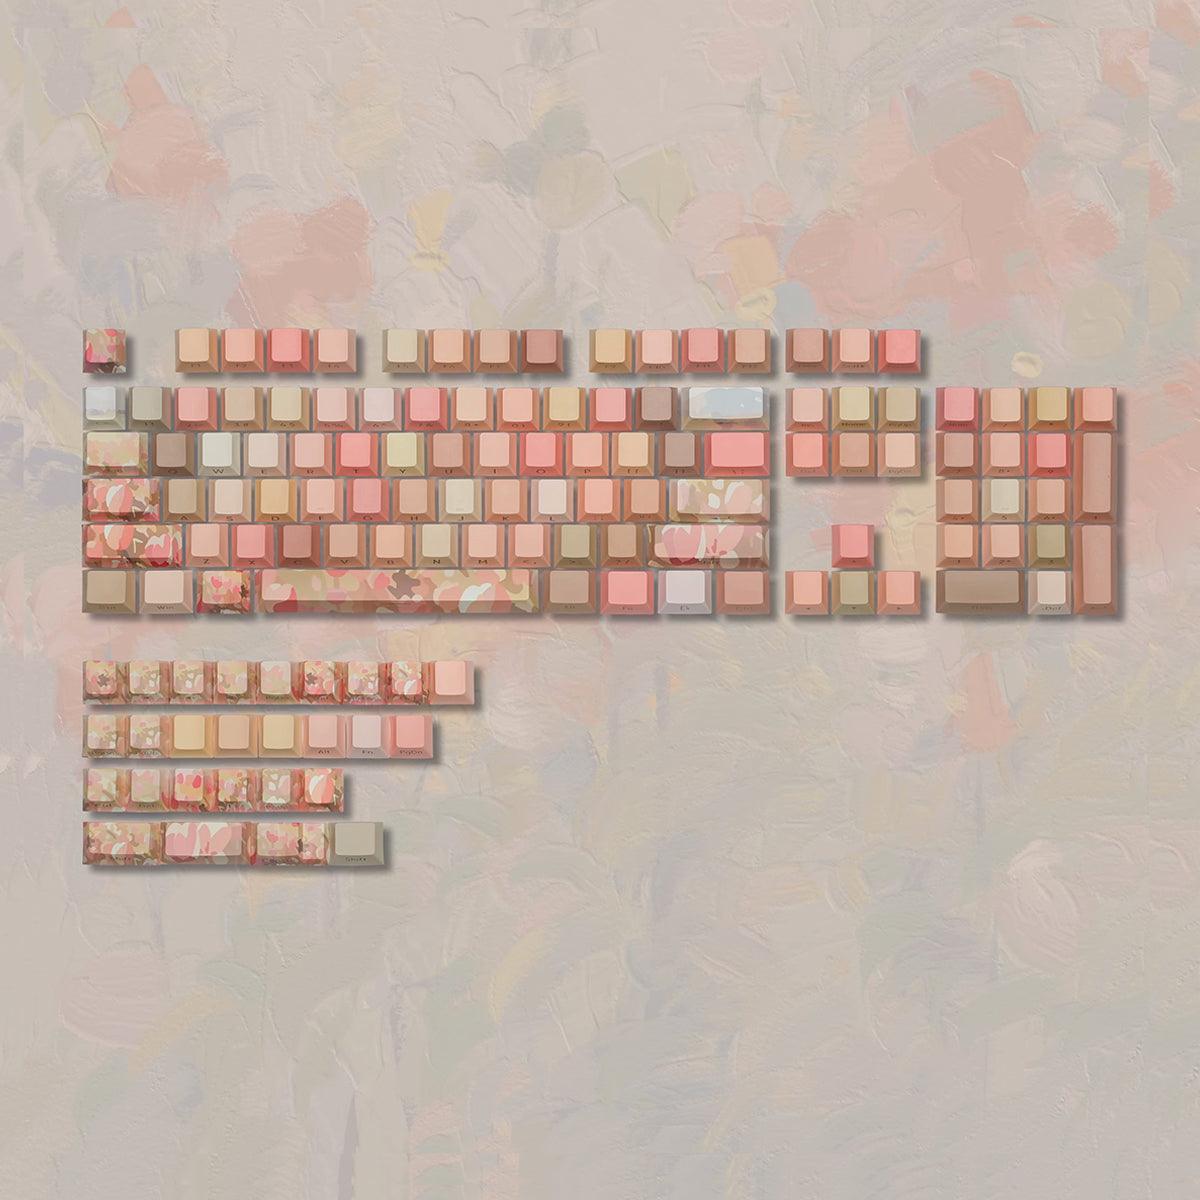 Cherry Profile Dye-Sub PBT Keycap Set - The Sea of Tulips - KeyCapUS